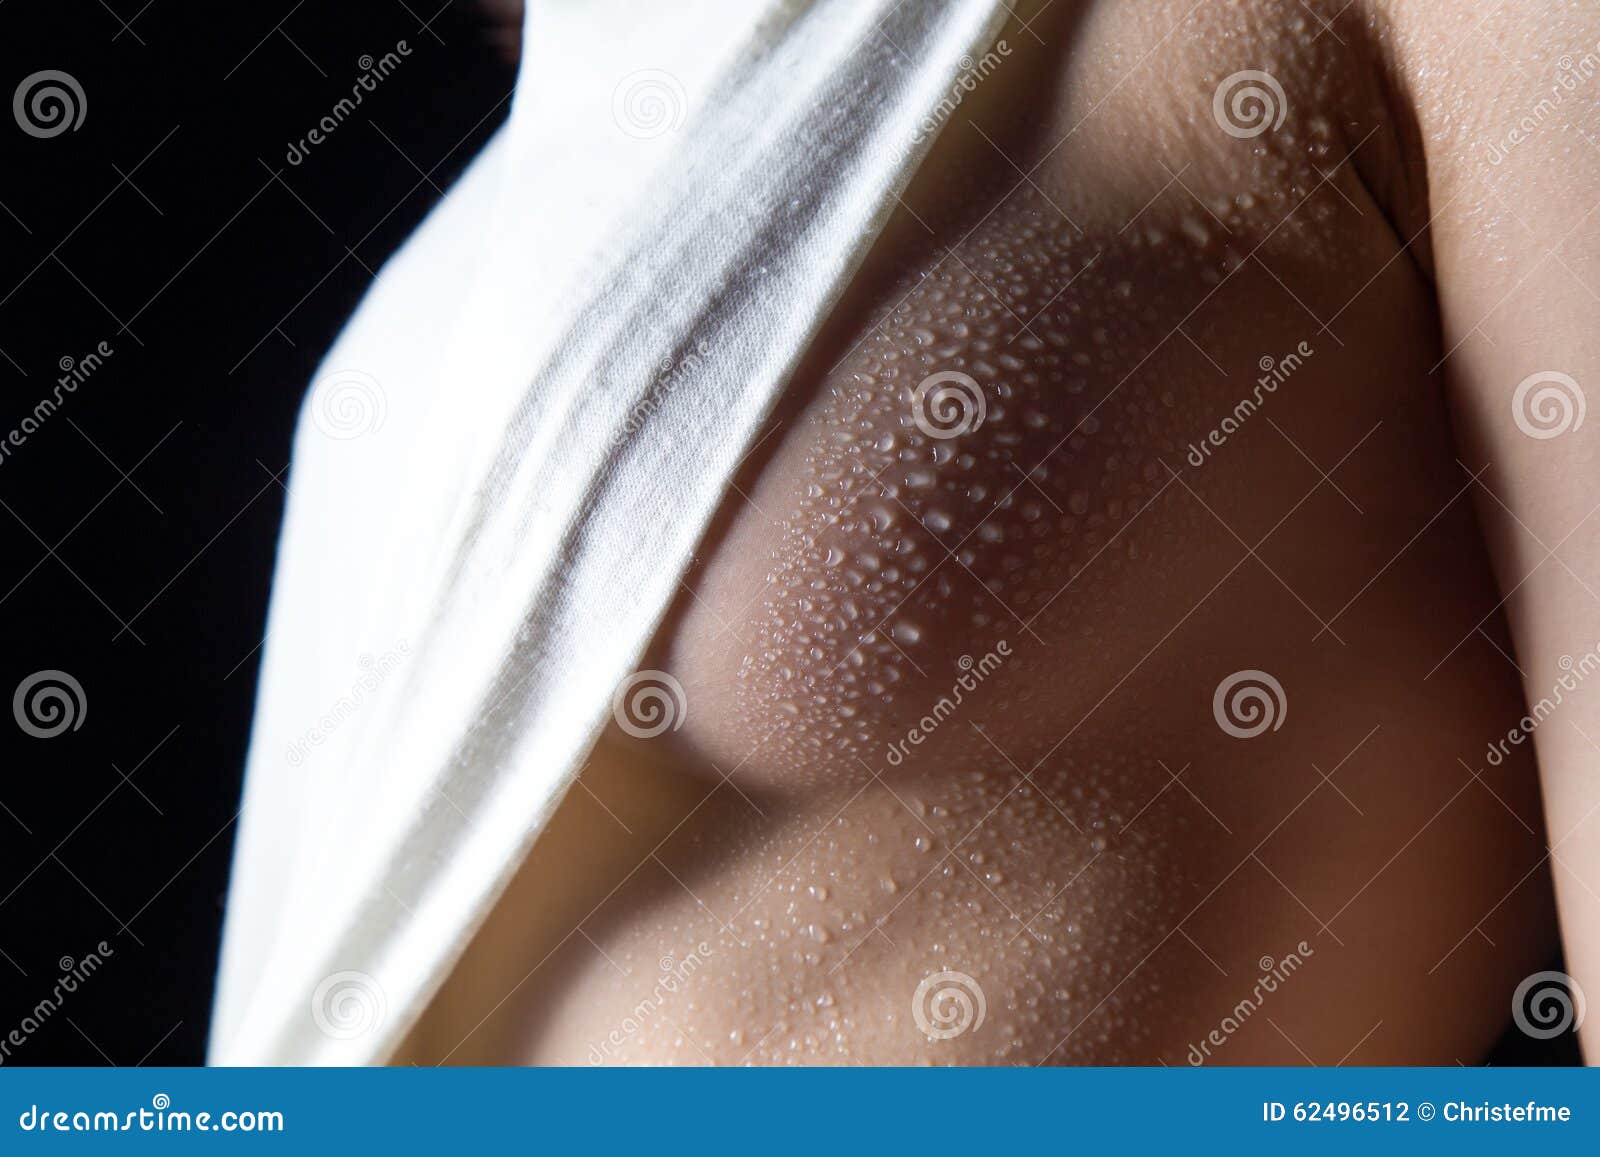 https://thumbs.dreamstime.com/z/woman-s-breast-drops-shadow-photo-62496512.jpg